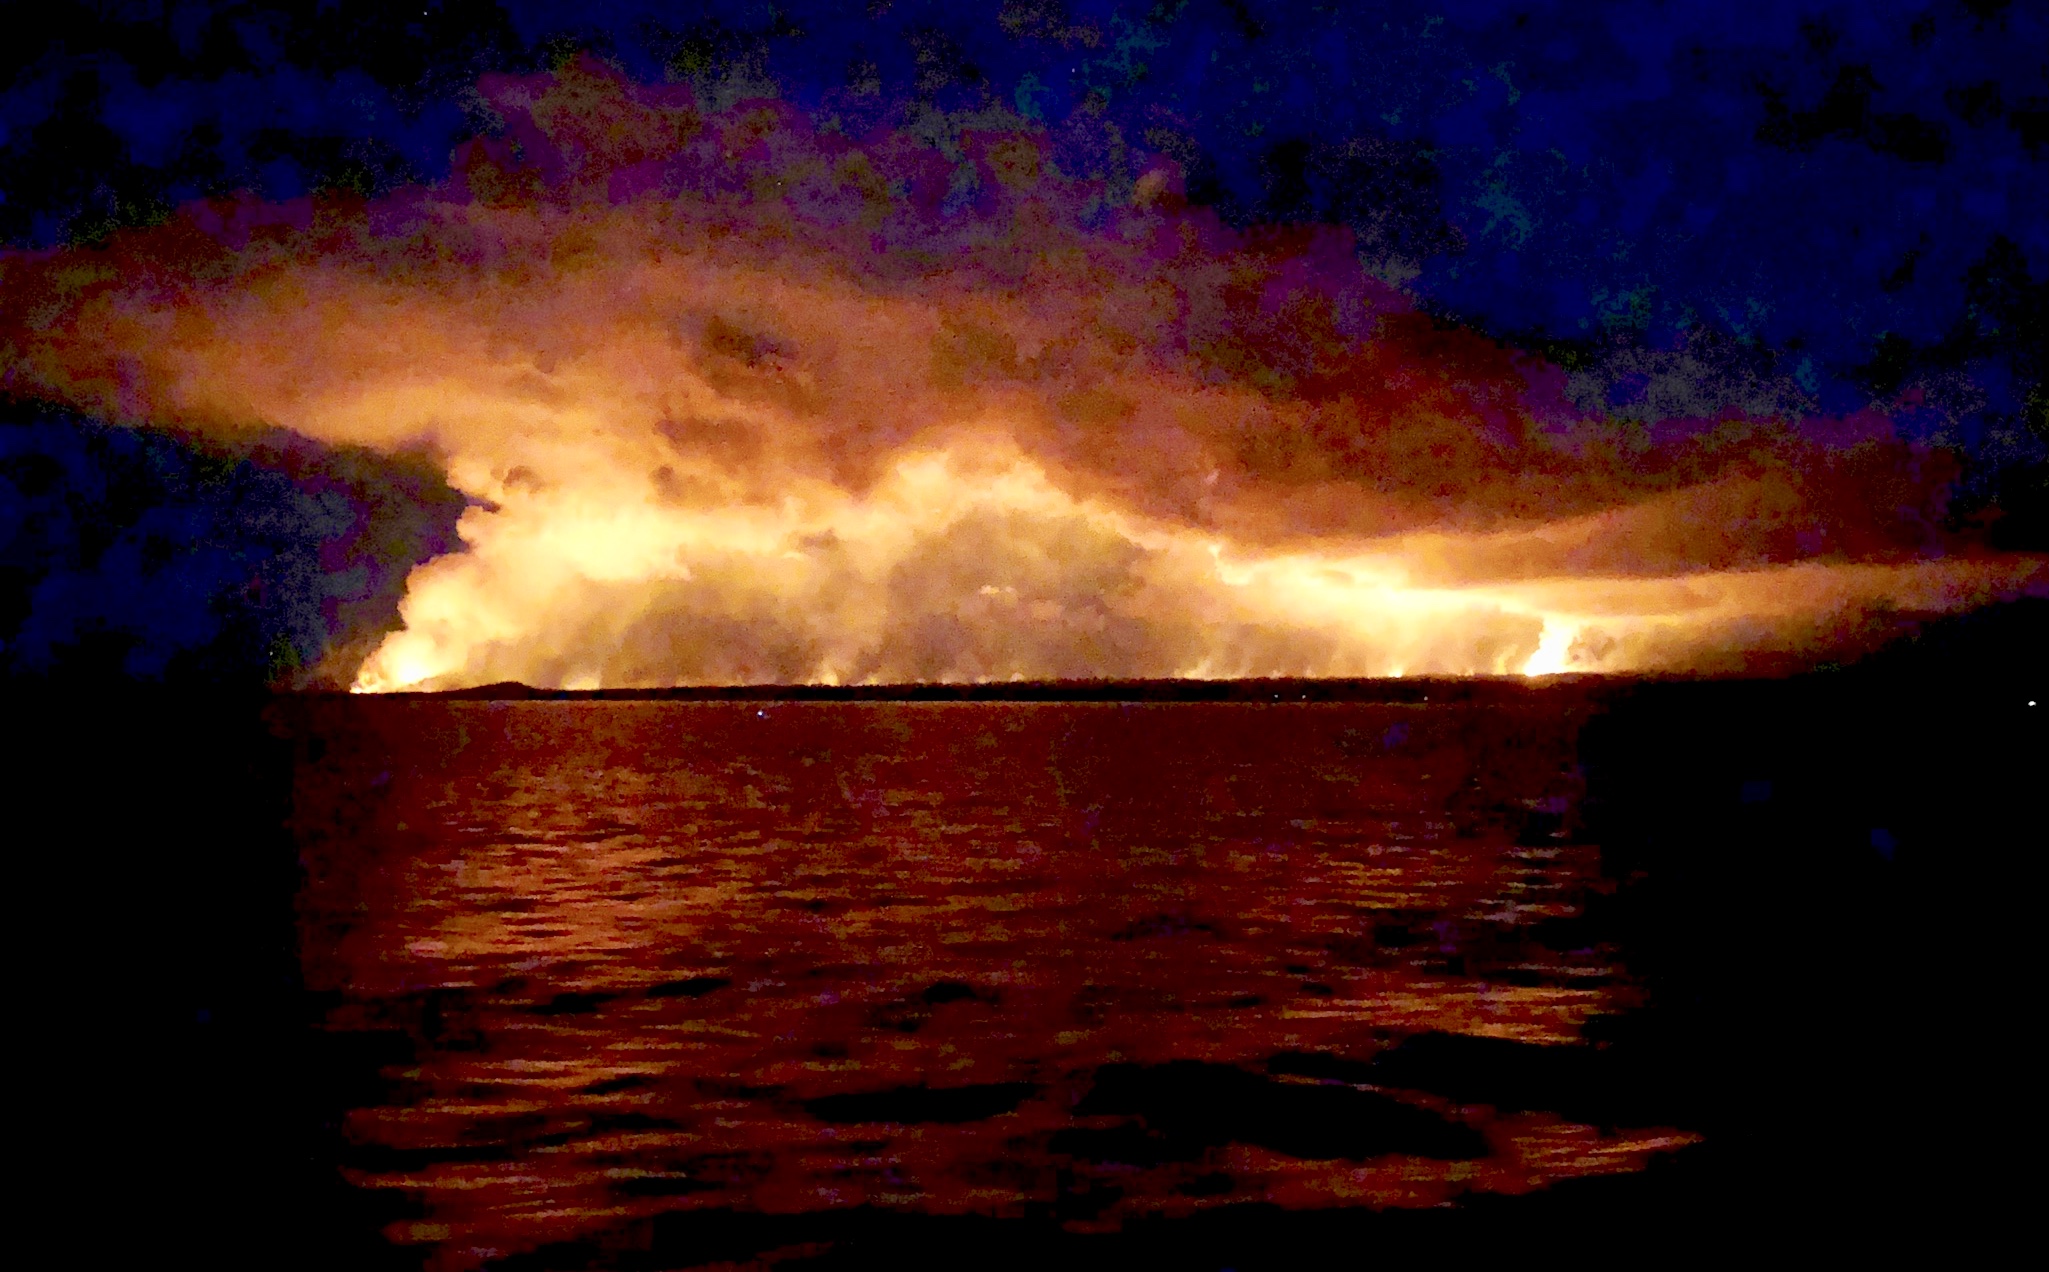 The volcano at night